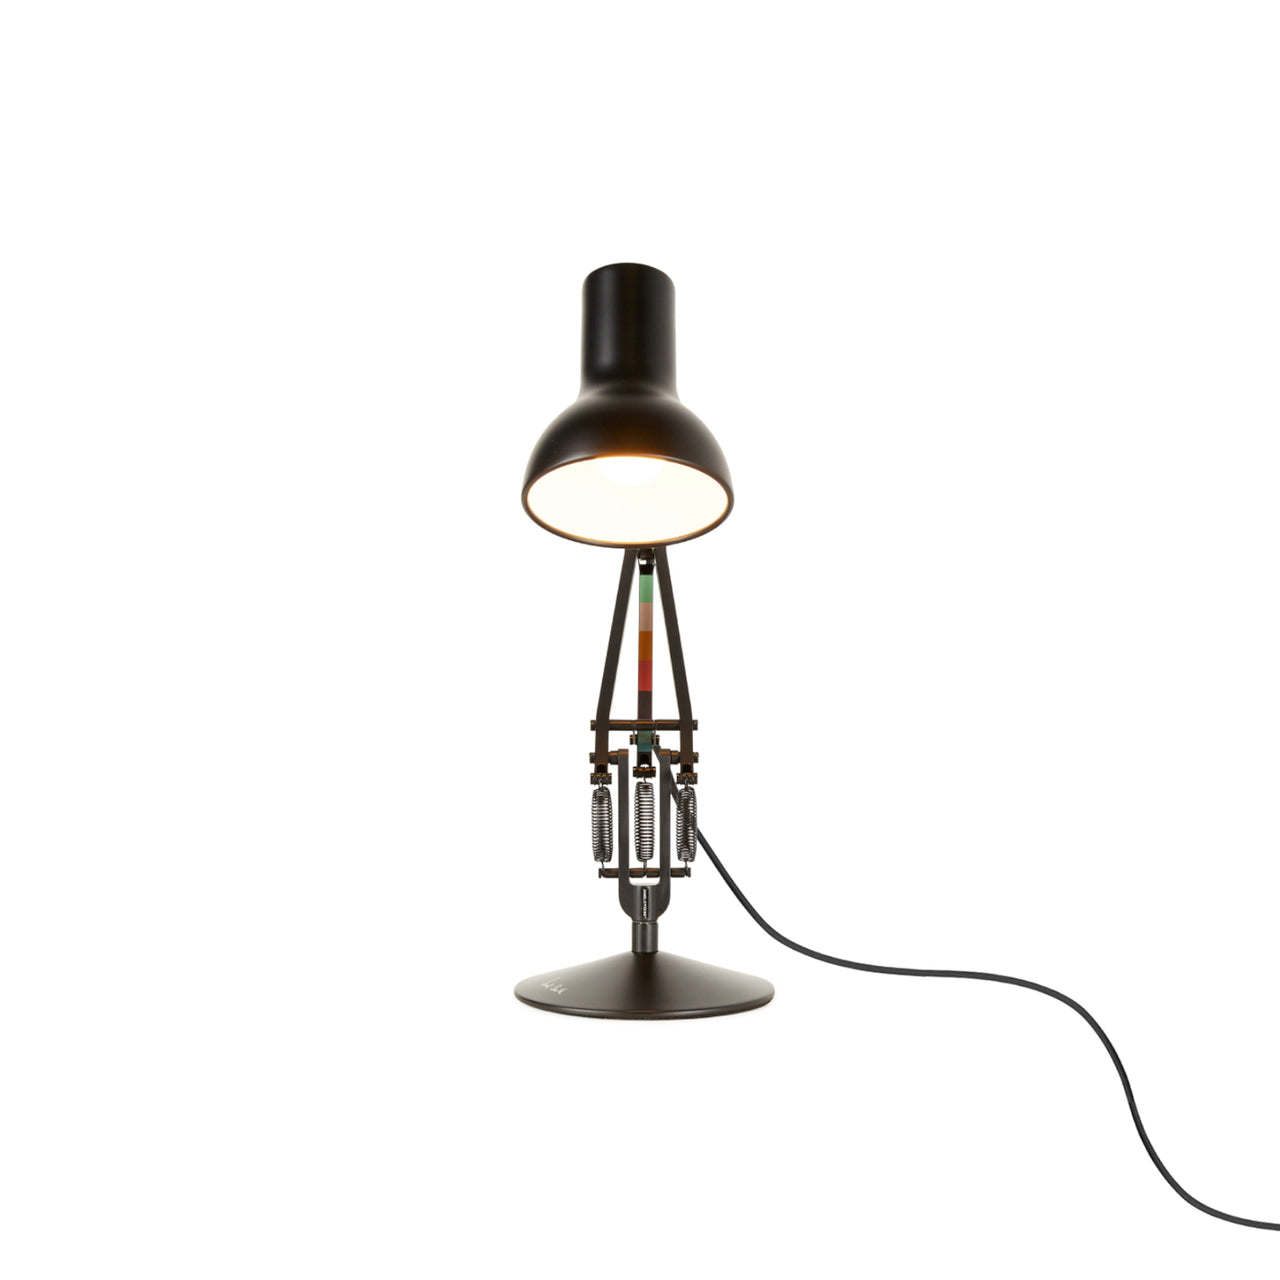 Type 75 Mini Desk Lamp: Paul Smith Edition Five